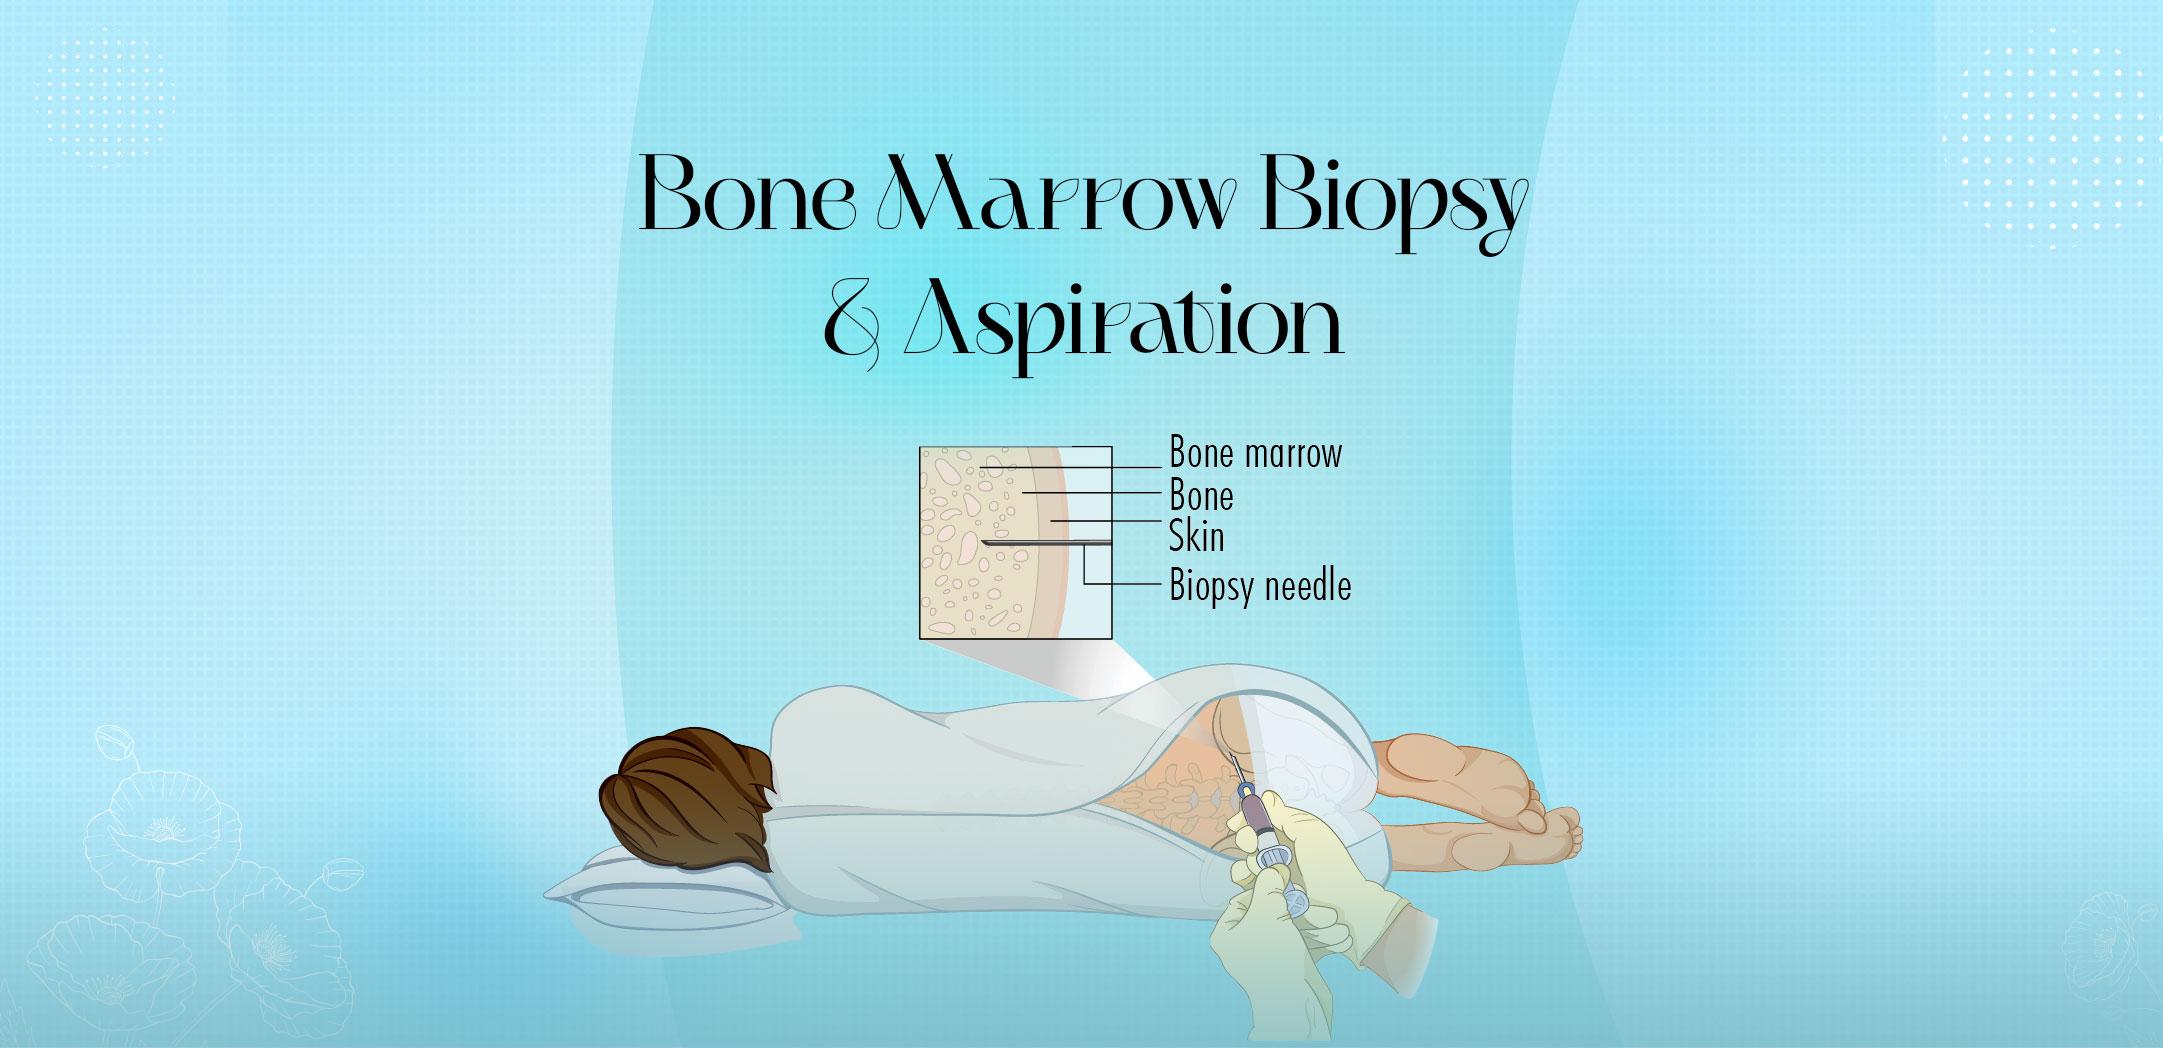 Bone Marrow Biopsy & Aspiration